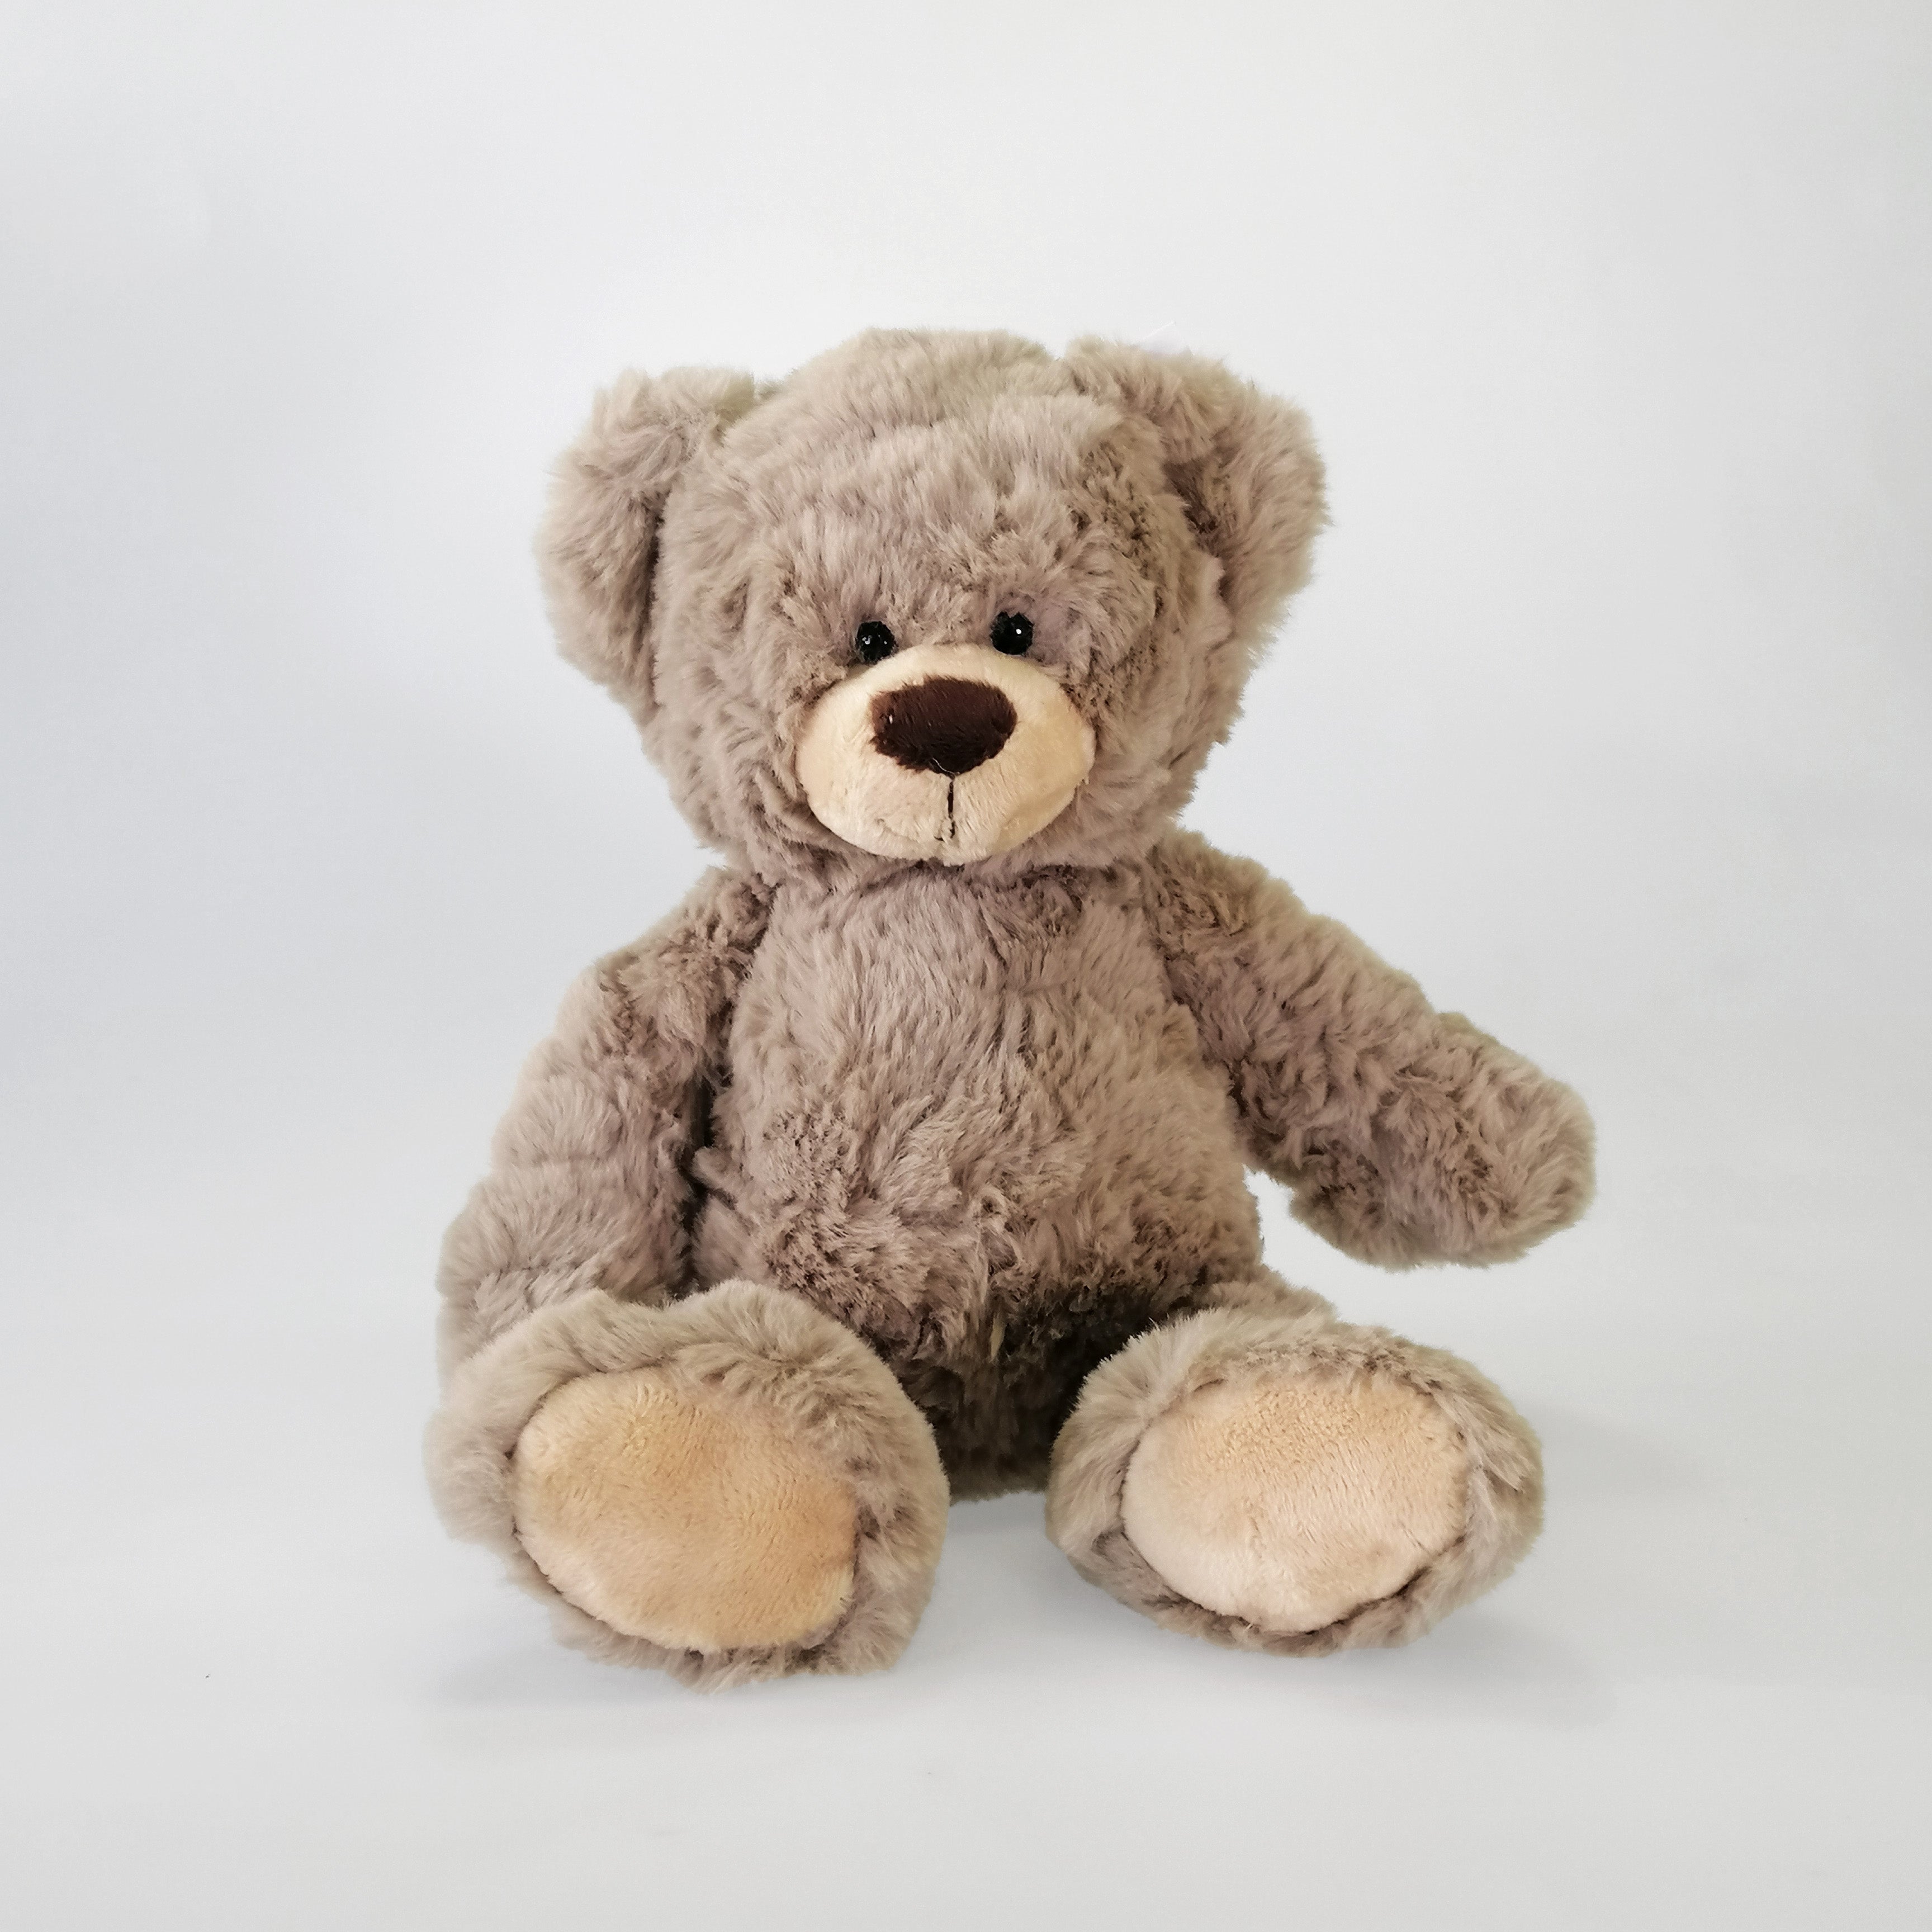 Soft Teddy Bear - Light Brown